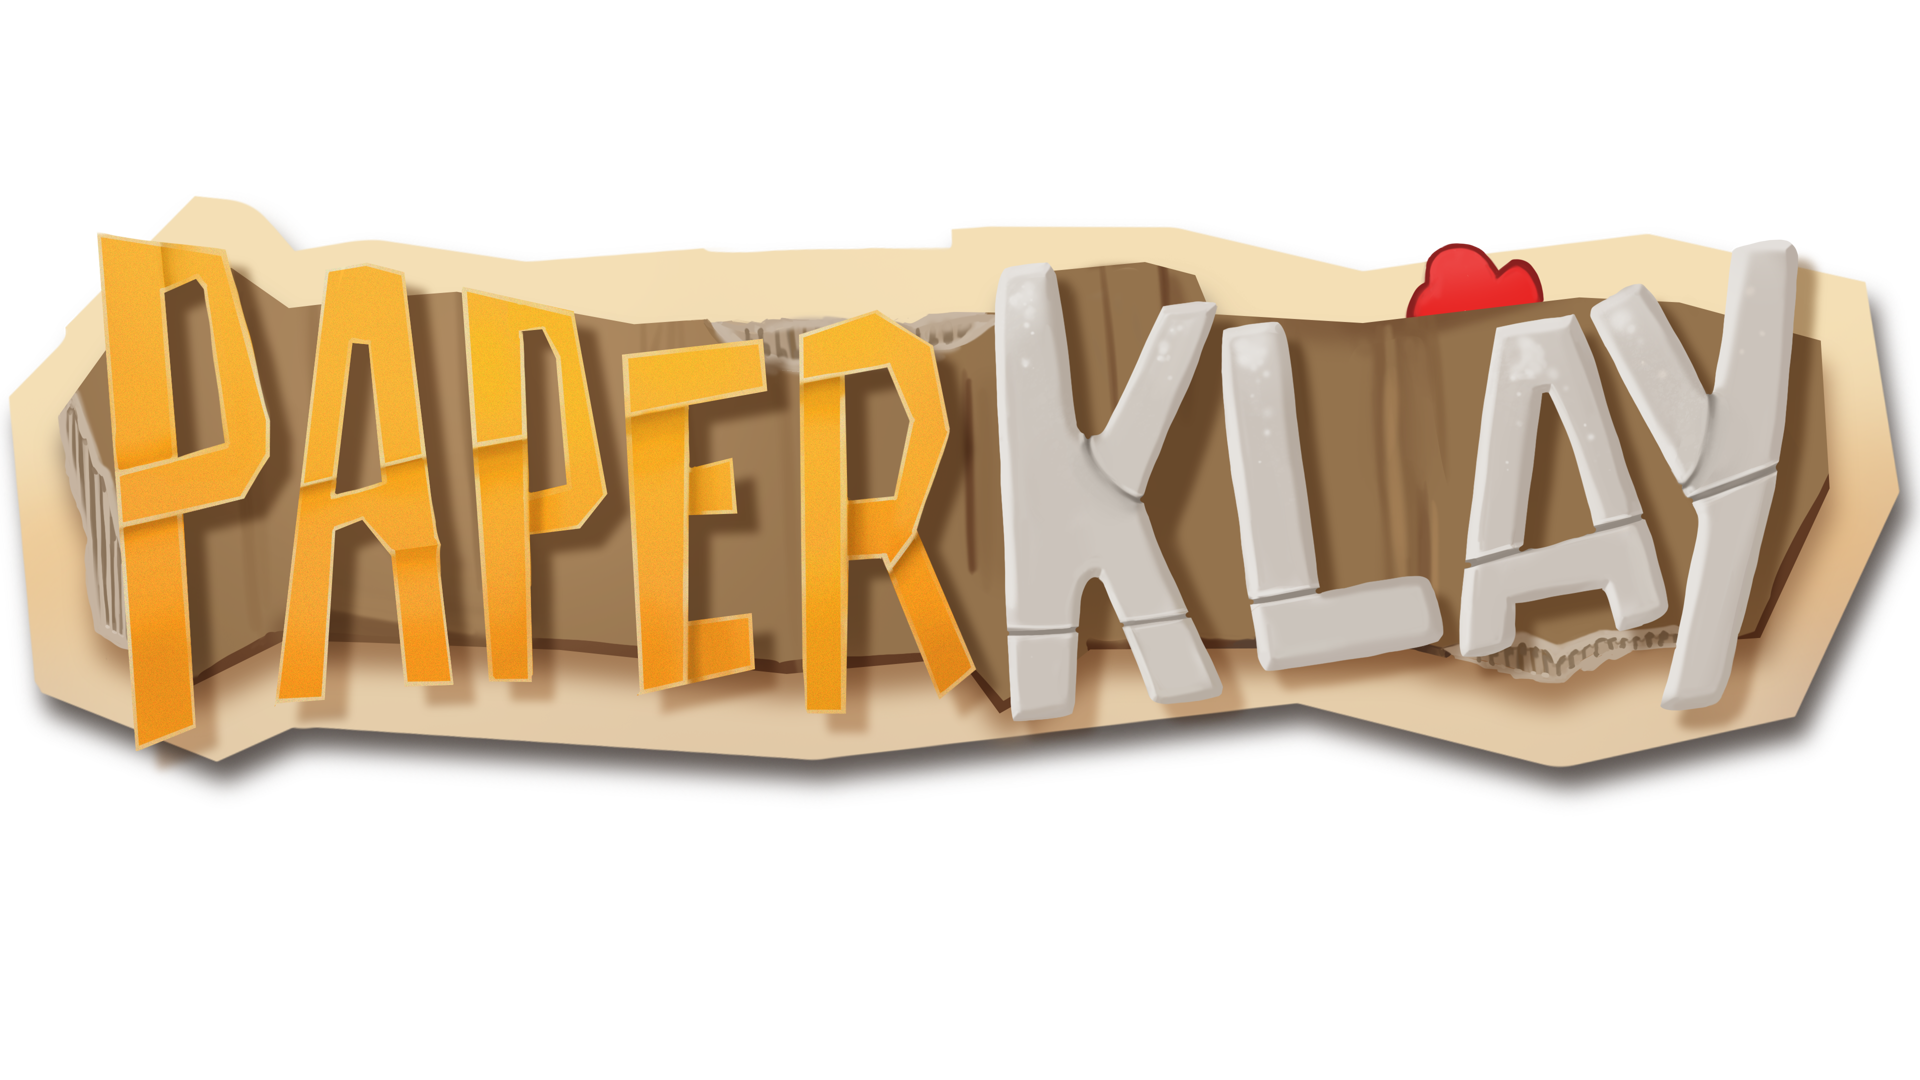 LogoPaperKlay_1920x1080